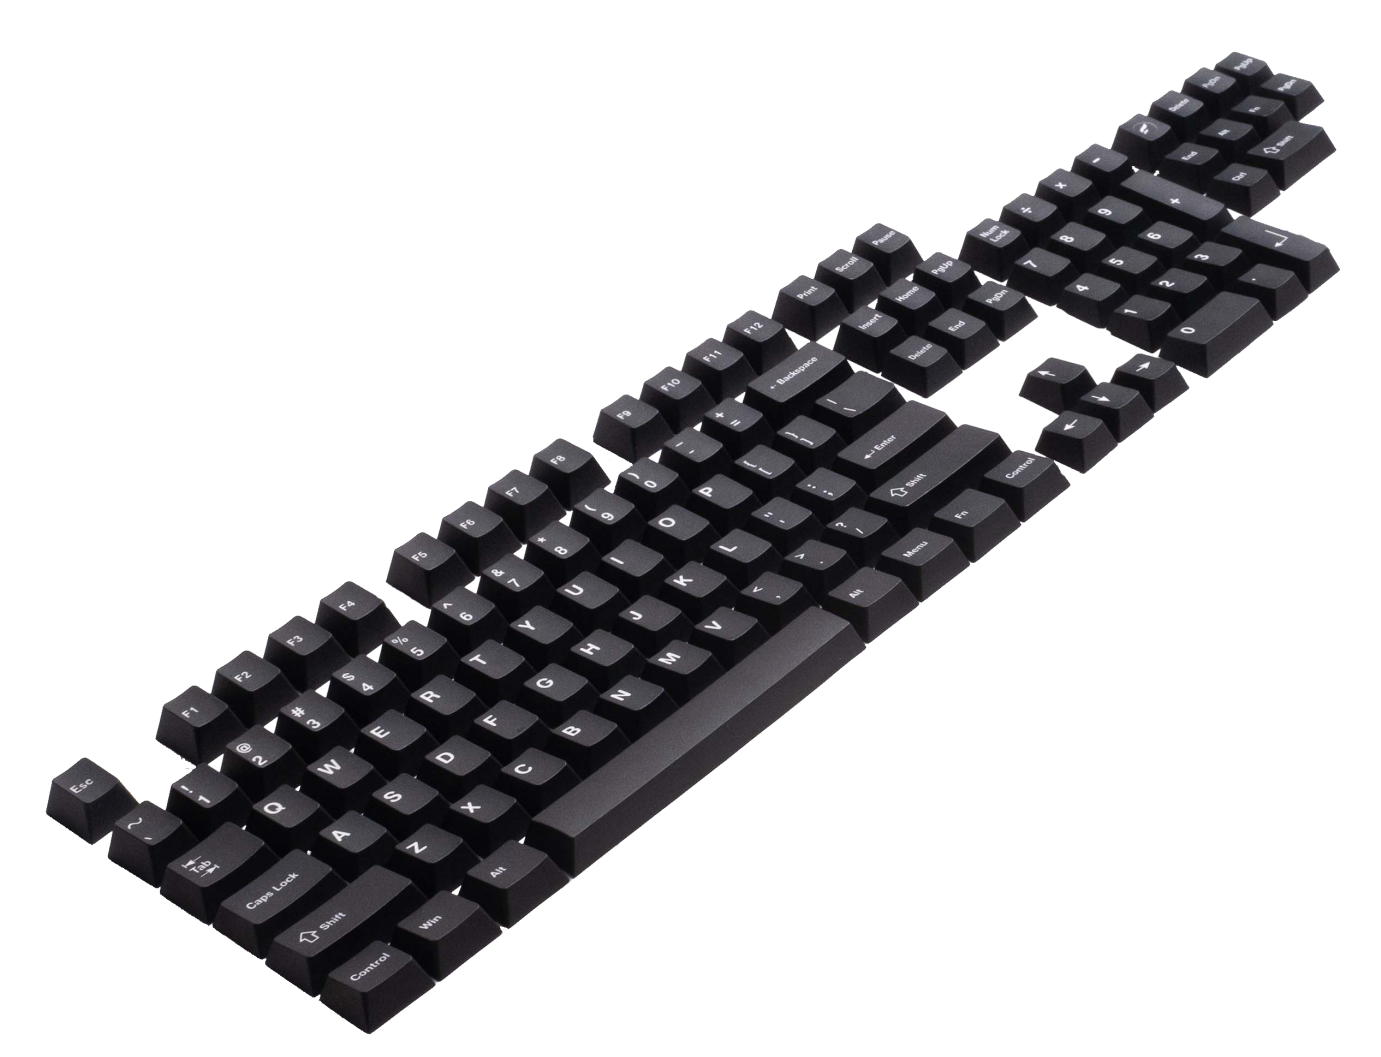 Nova Keyboard PBT Keycaps Odin Gaming